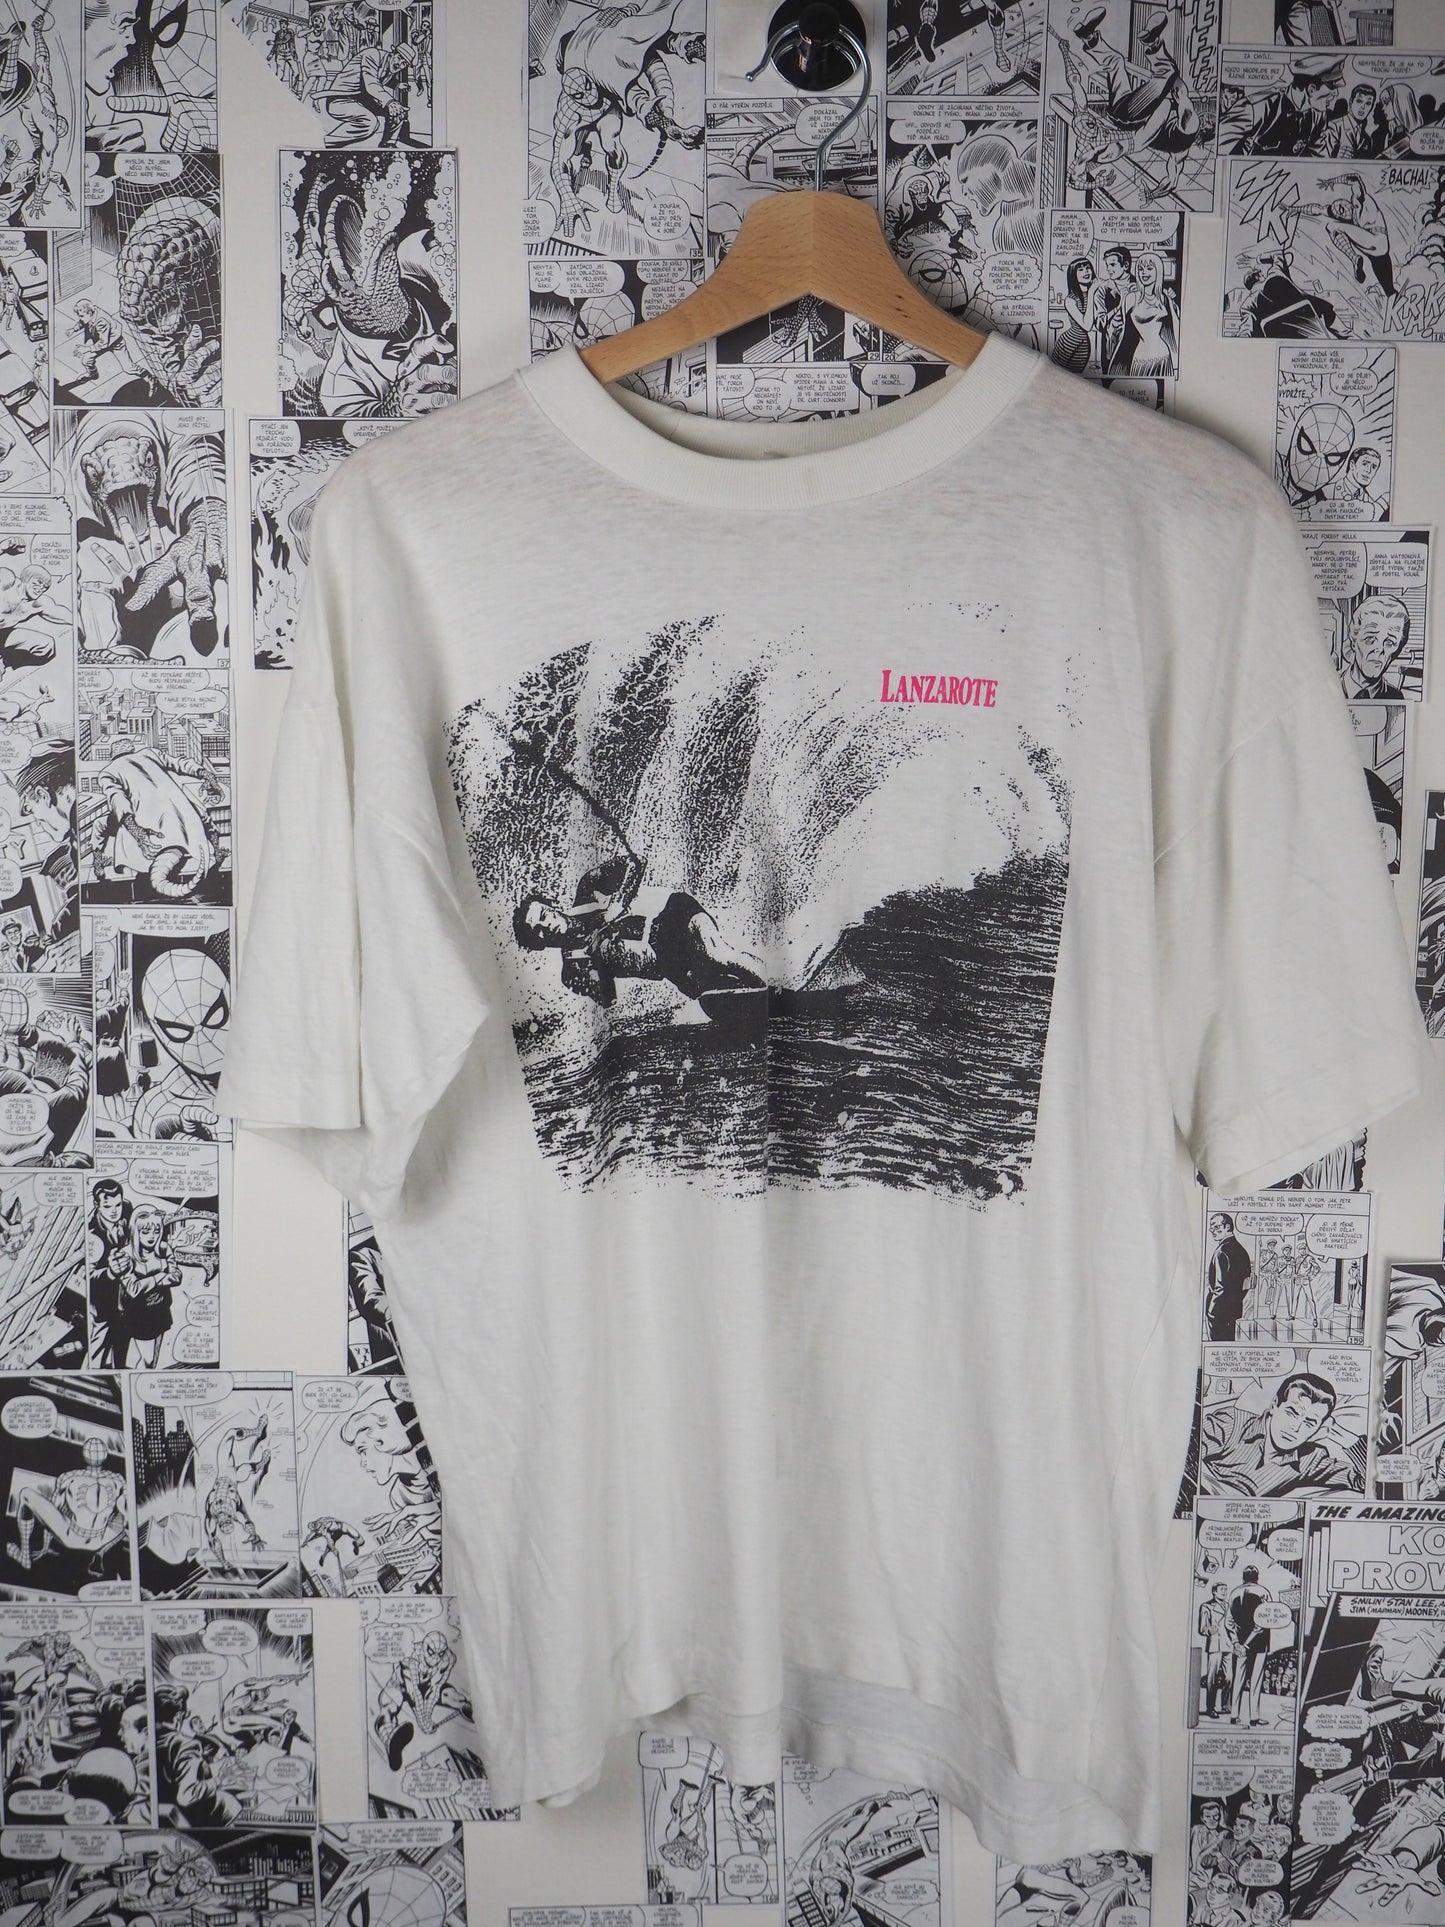 Vintage Lanzarote 80s t-shirt - size M